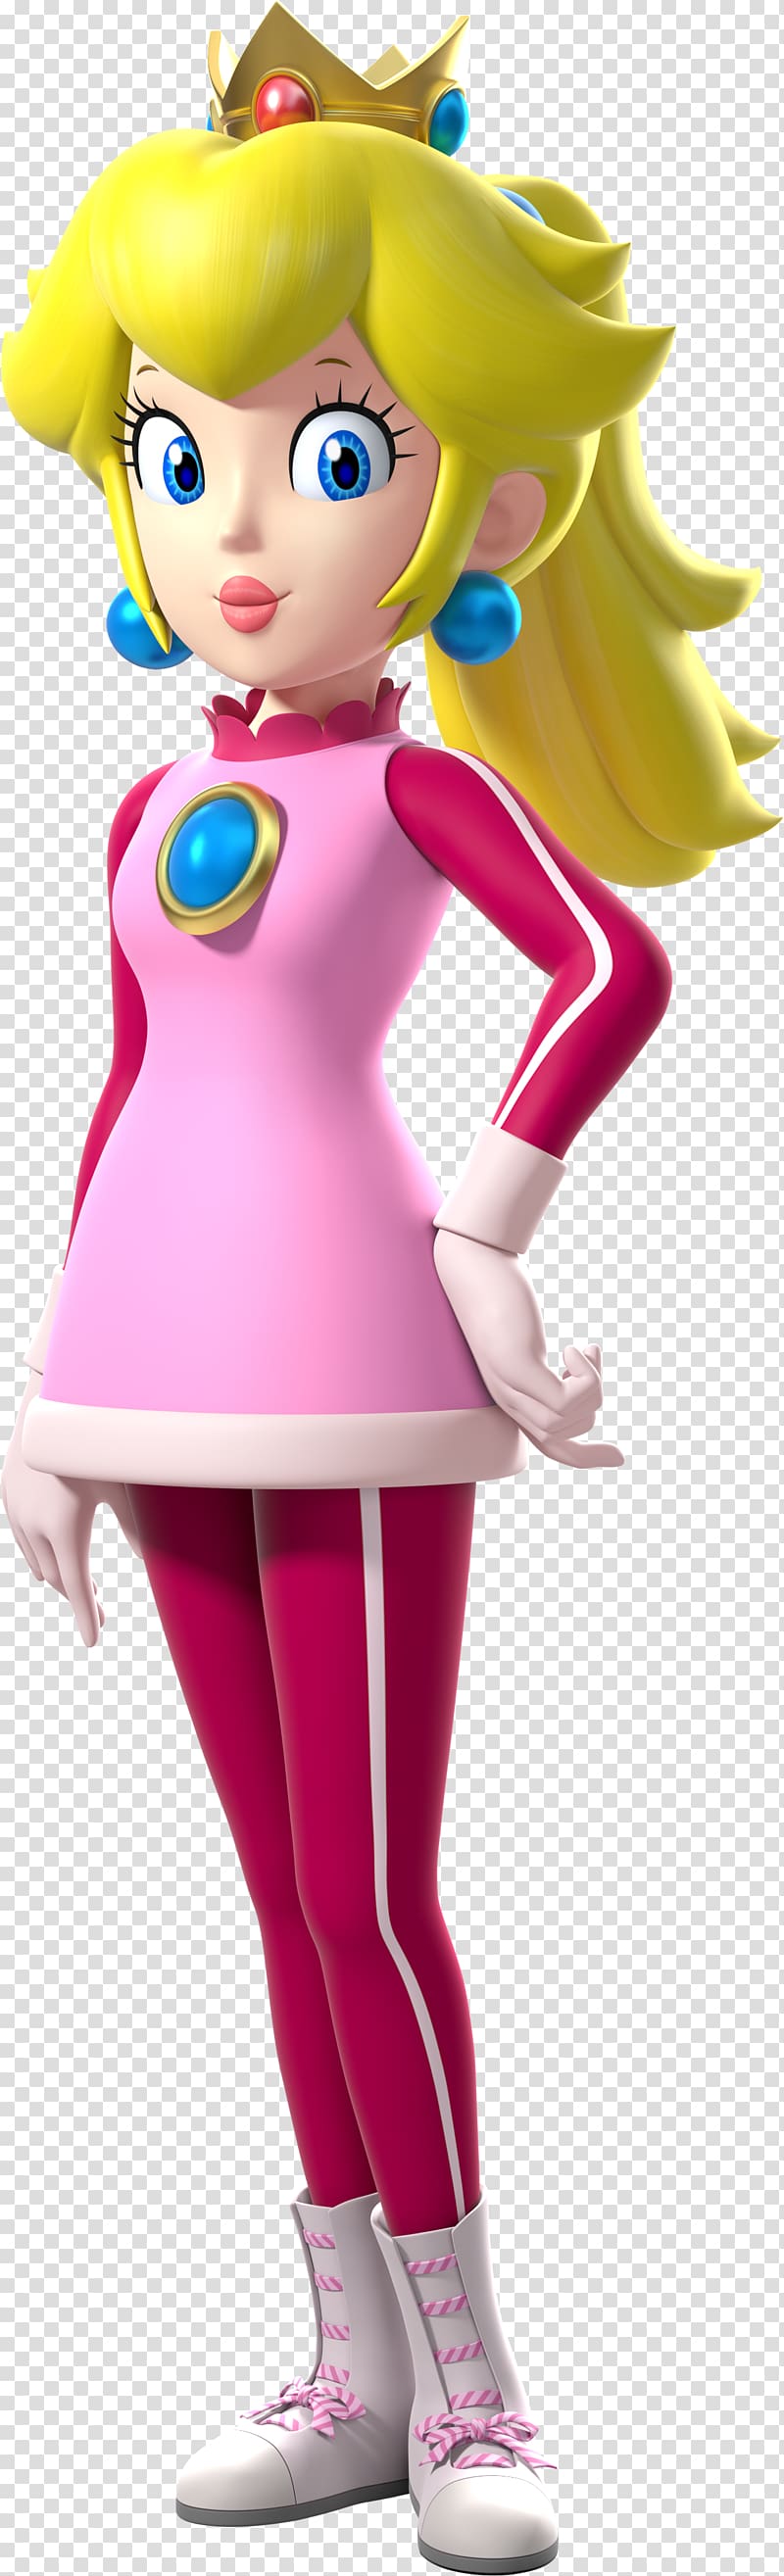 Illustration Pink M Figurine Mascot, princess peach transparent background PNG clipart